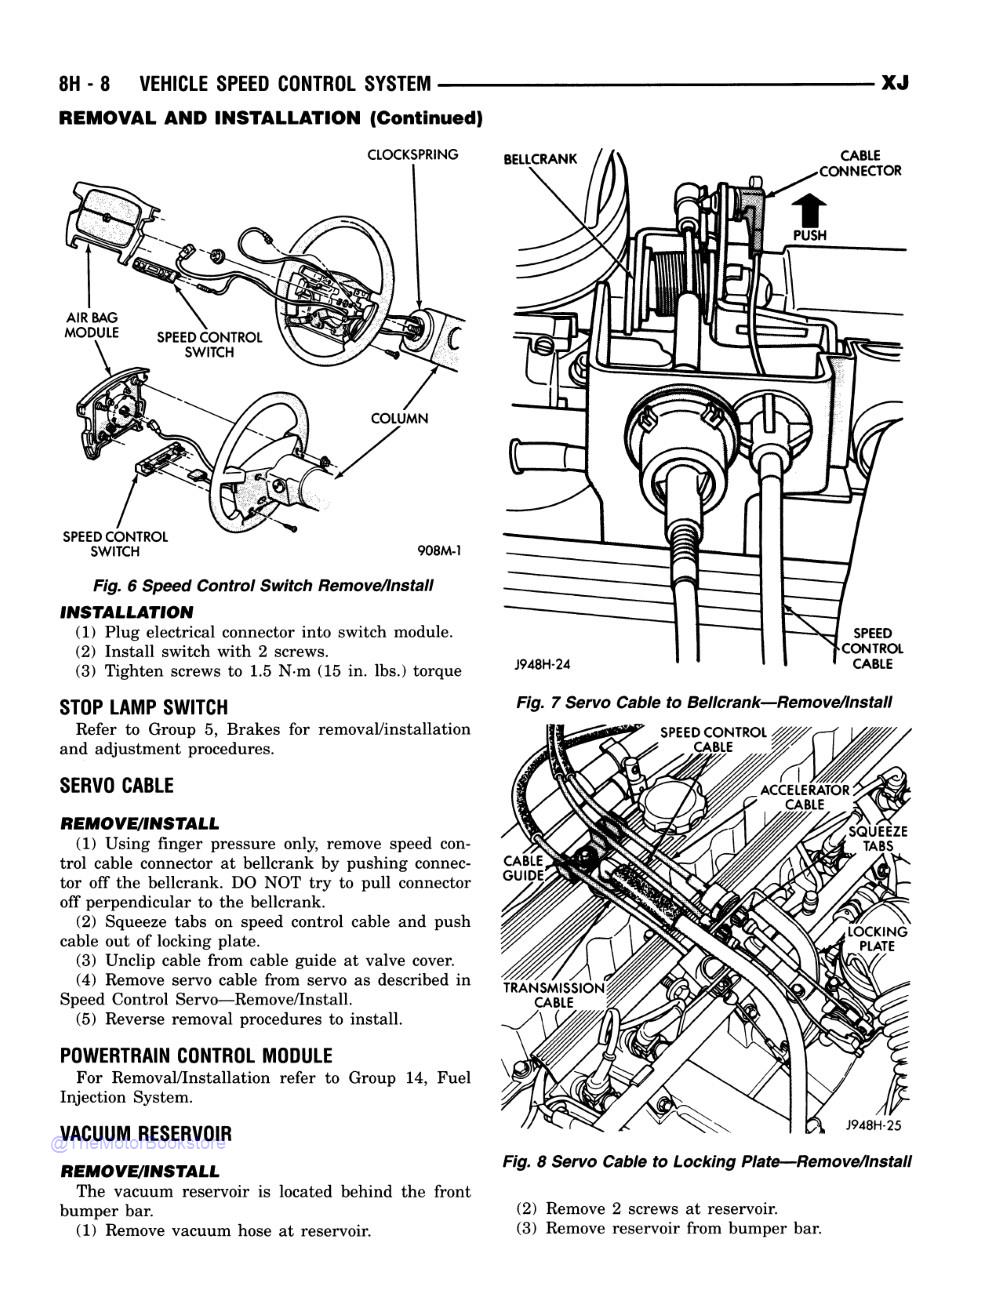 1996 Jeep Cherokee Shop Manual - Sample Page 1